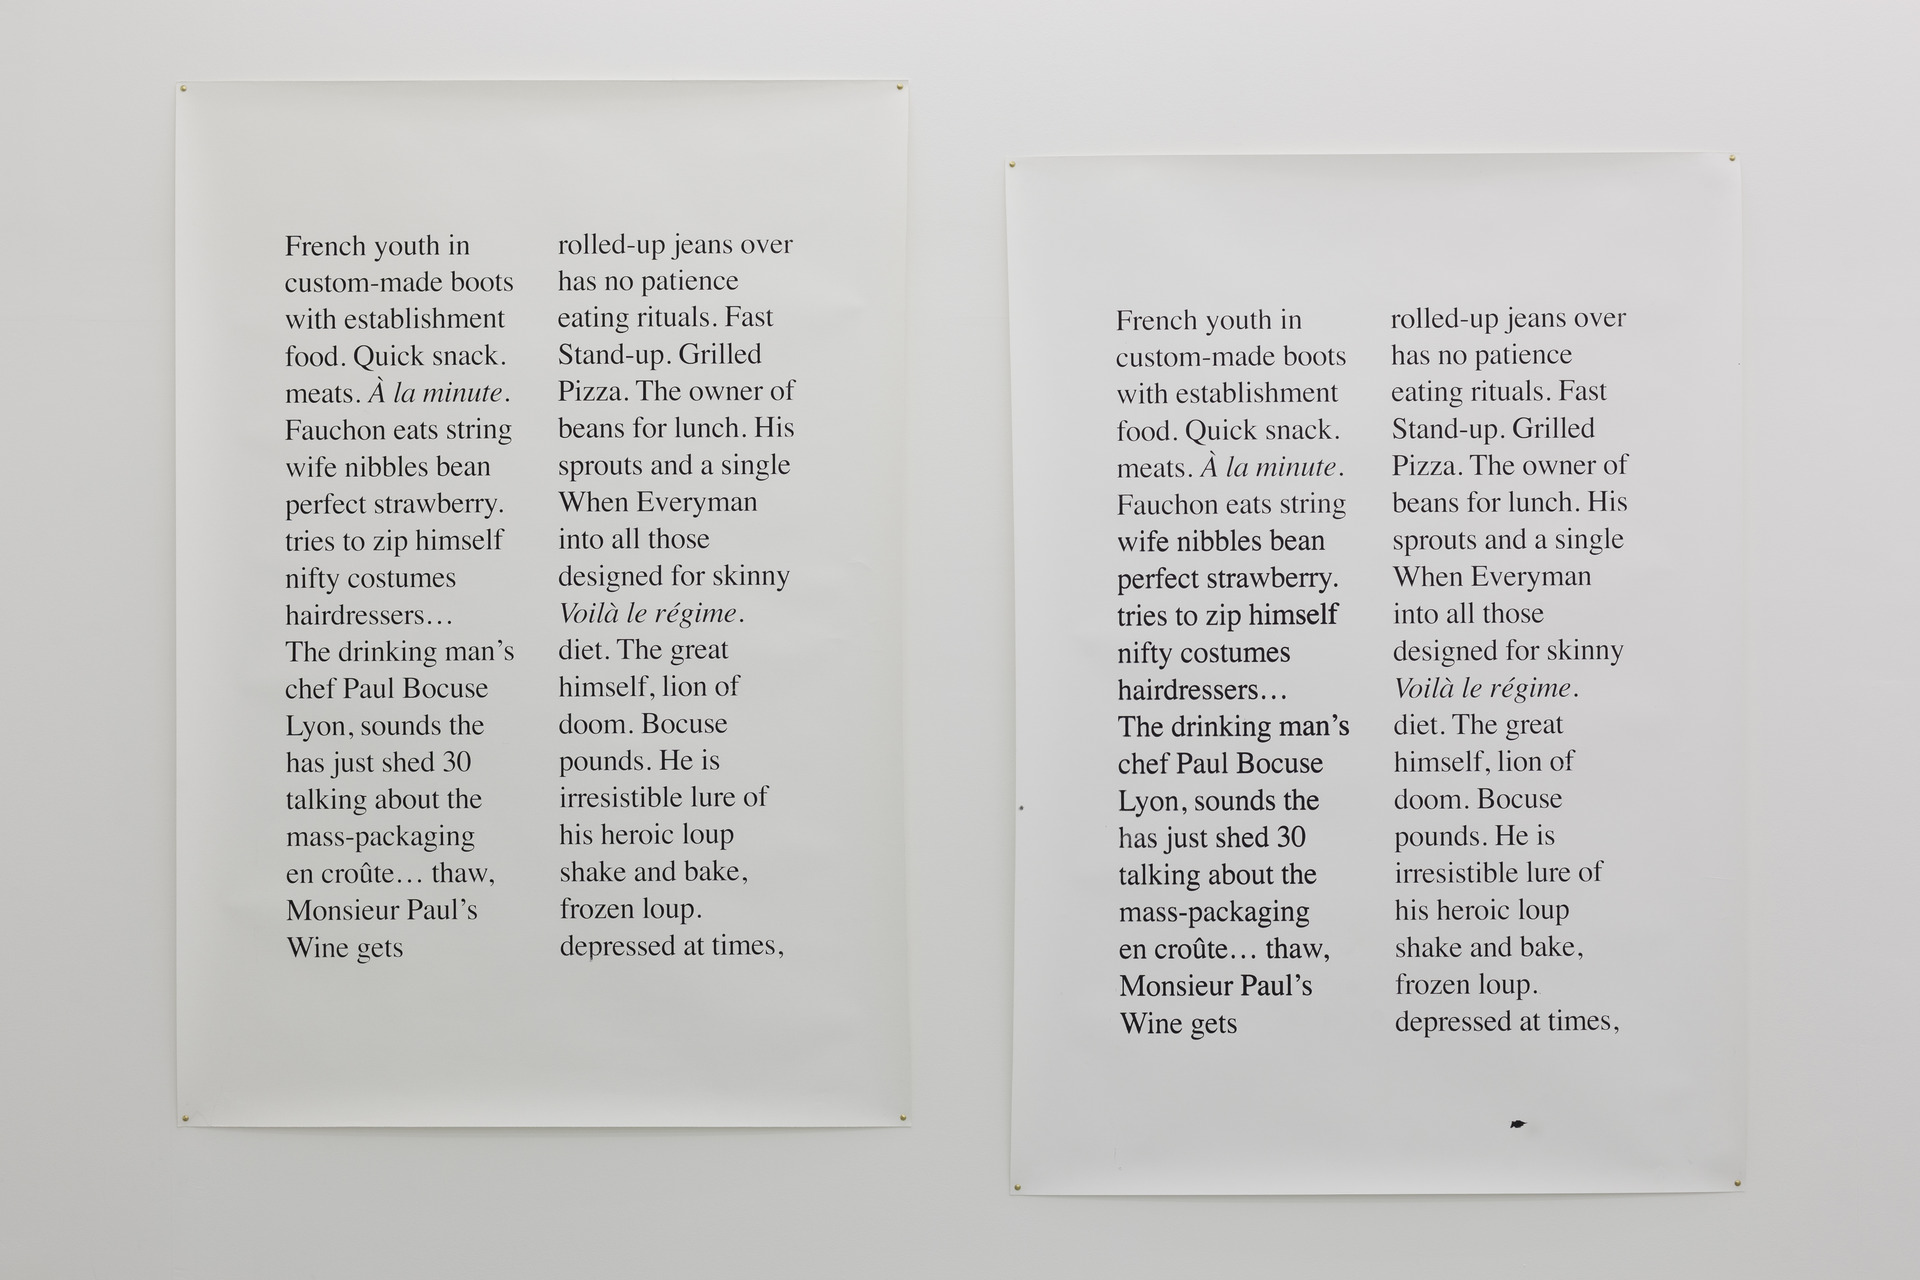 David Jourdan, 'Untitled' (Status Report on la Grande Cuisine), 2013, Silkscreen on paper, 150x106cm